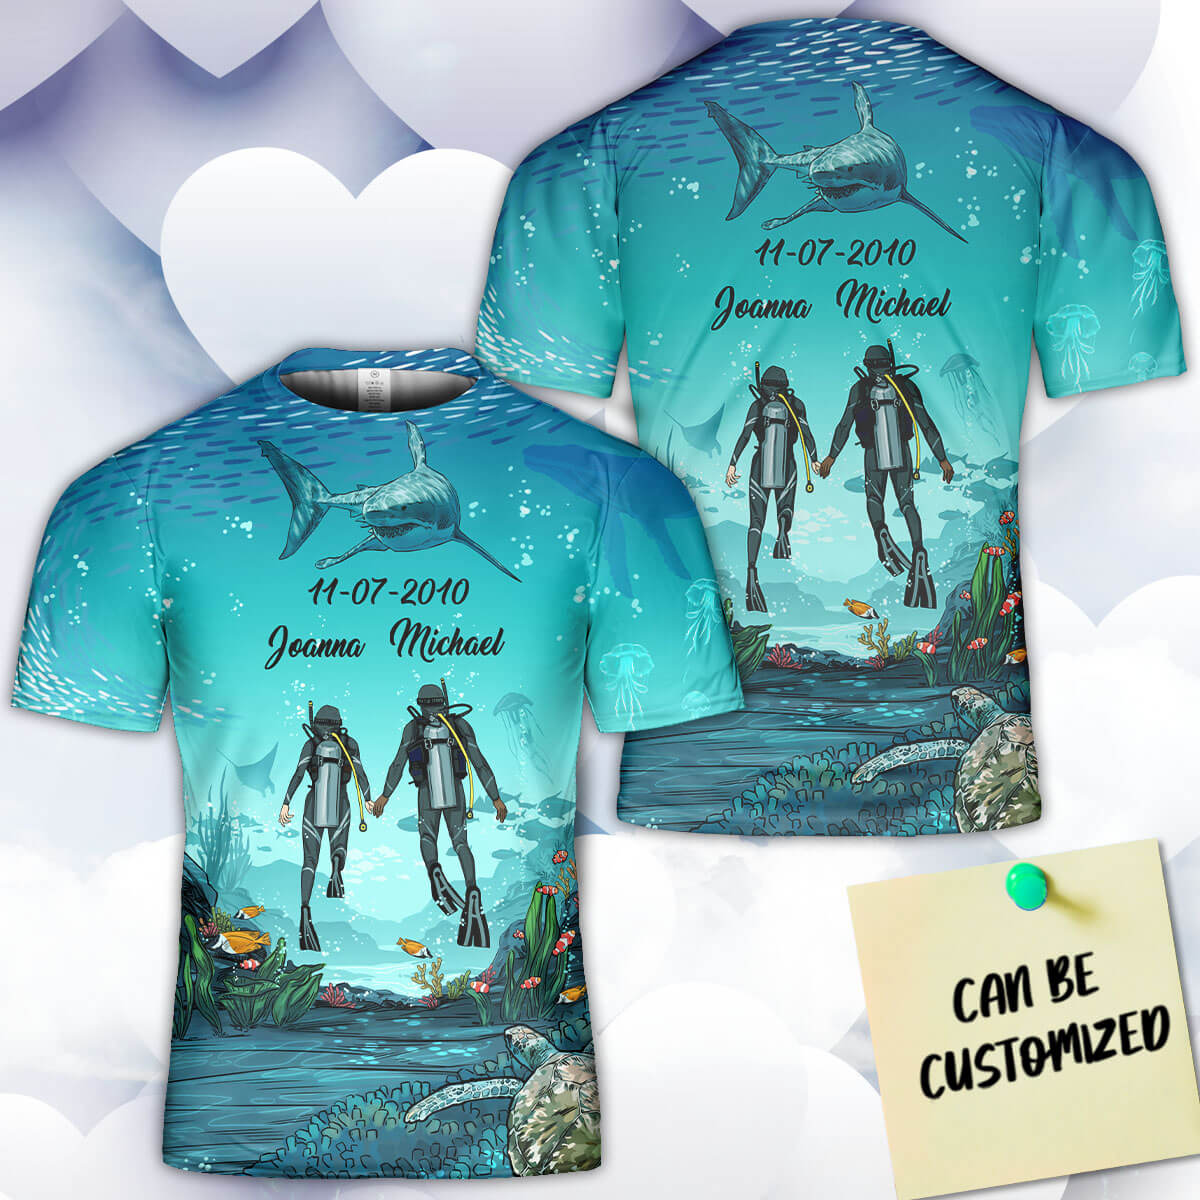 I Love Scuba Diving - Scuba Gift Idea - Scuba Lifestyle T-shirt